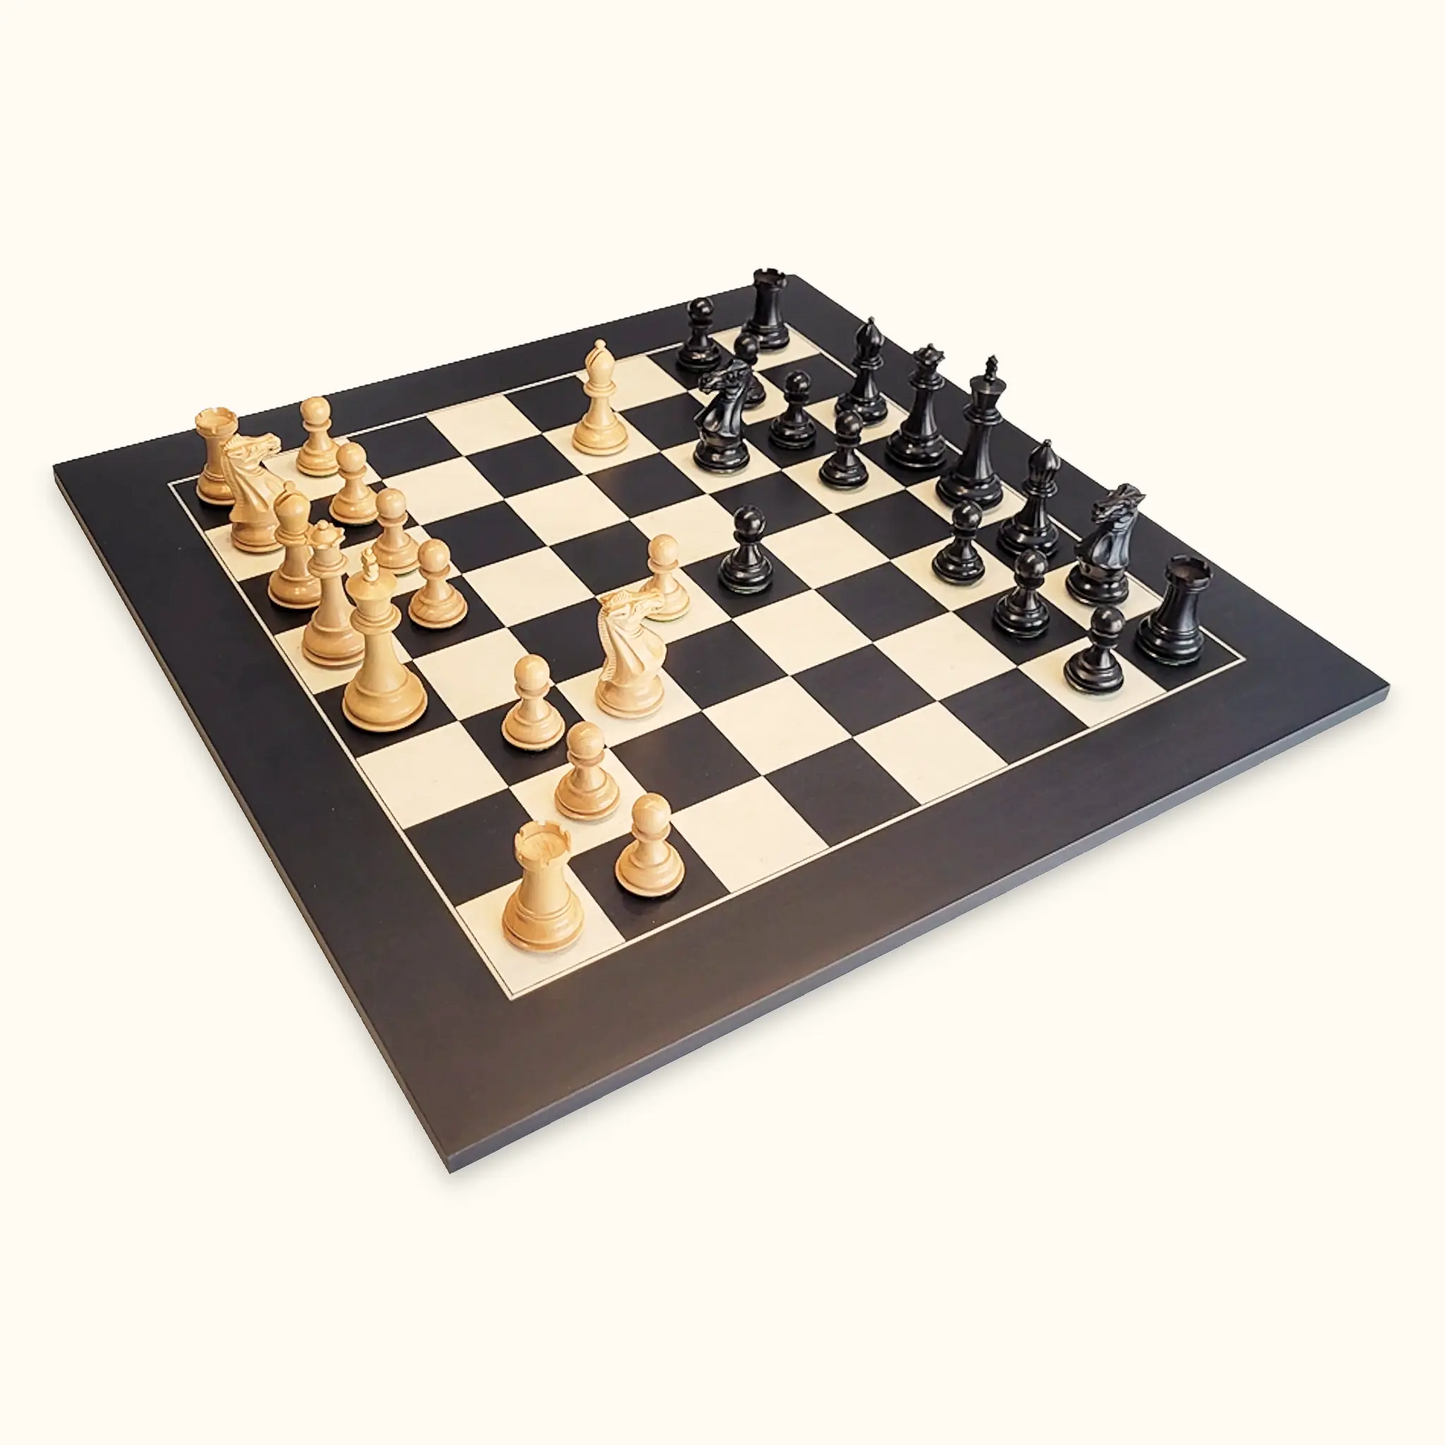 Chess pieces stallion knight ebonized on black deluxe chessboard diagonal